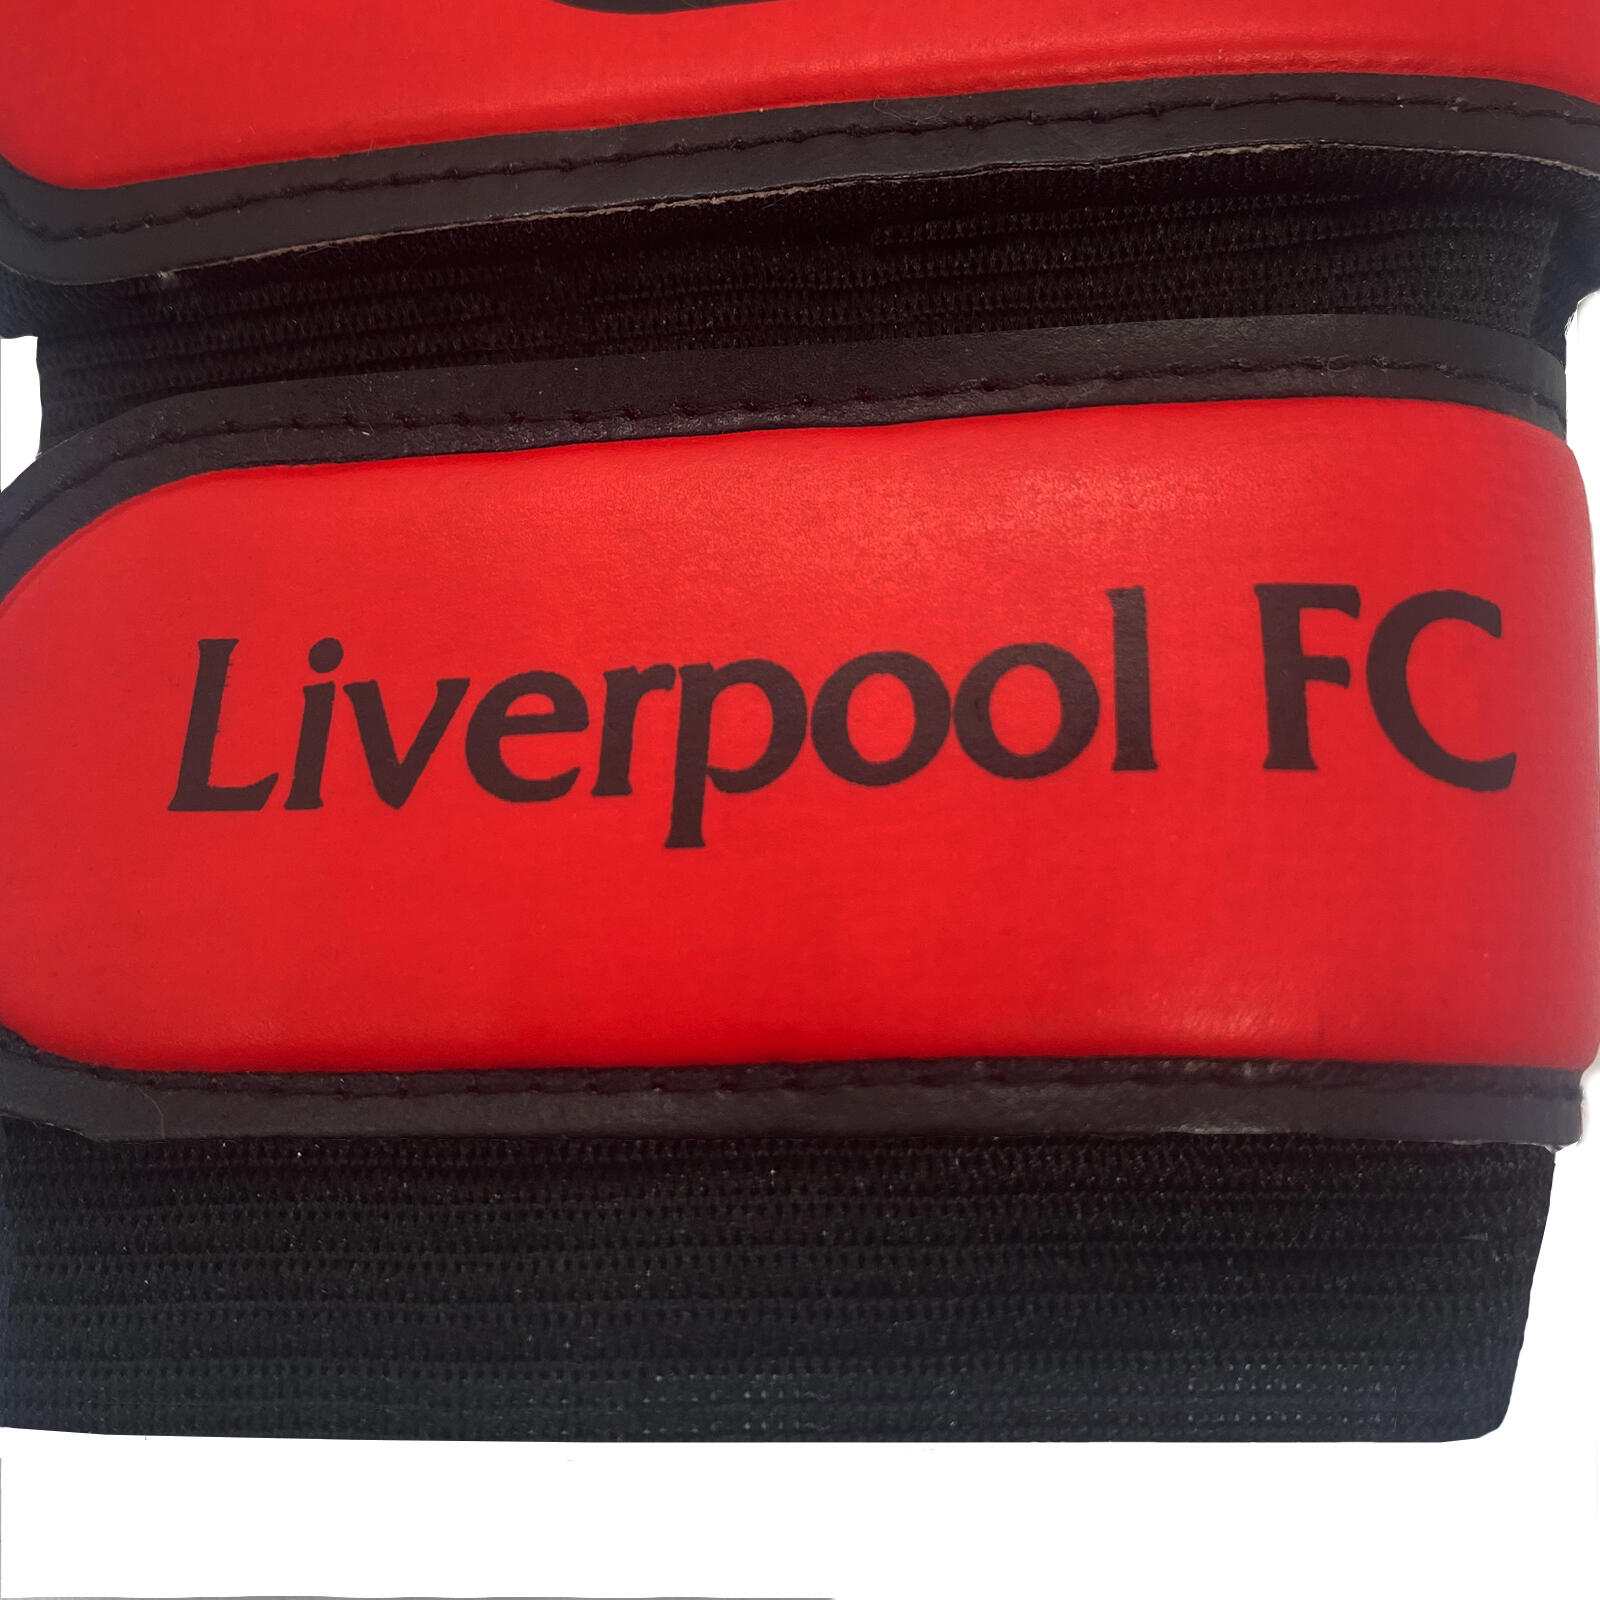 Liverpool FC Boys Gloves Goalie Goalkeeper Kids Youths OFFICIAL Football Gift 4/5